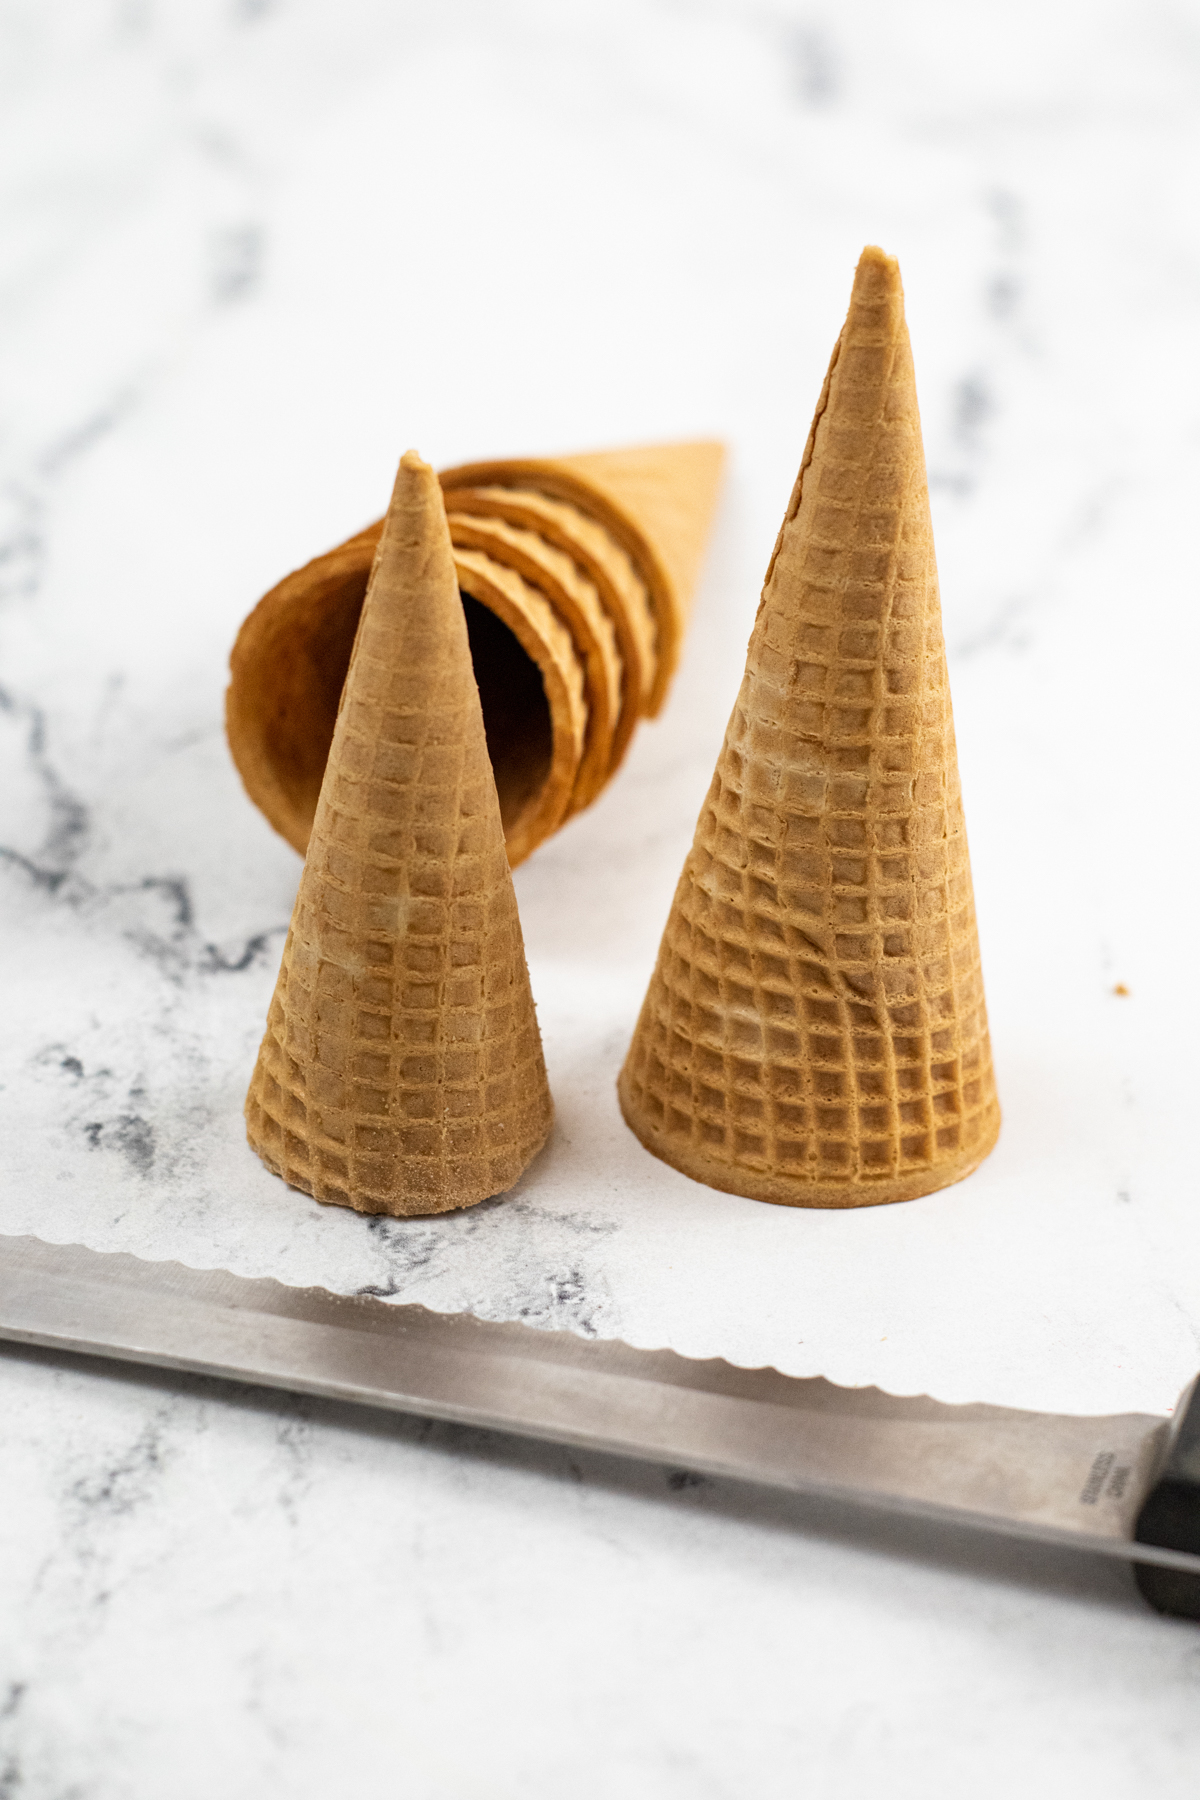 ice cream cones with tips cut off